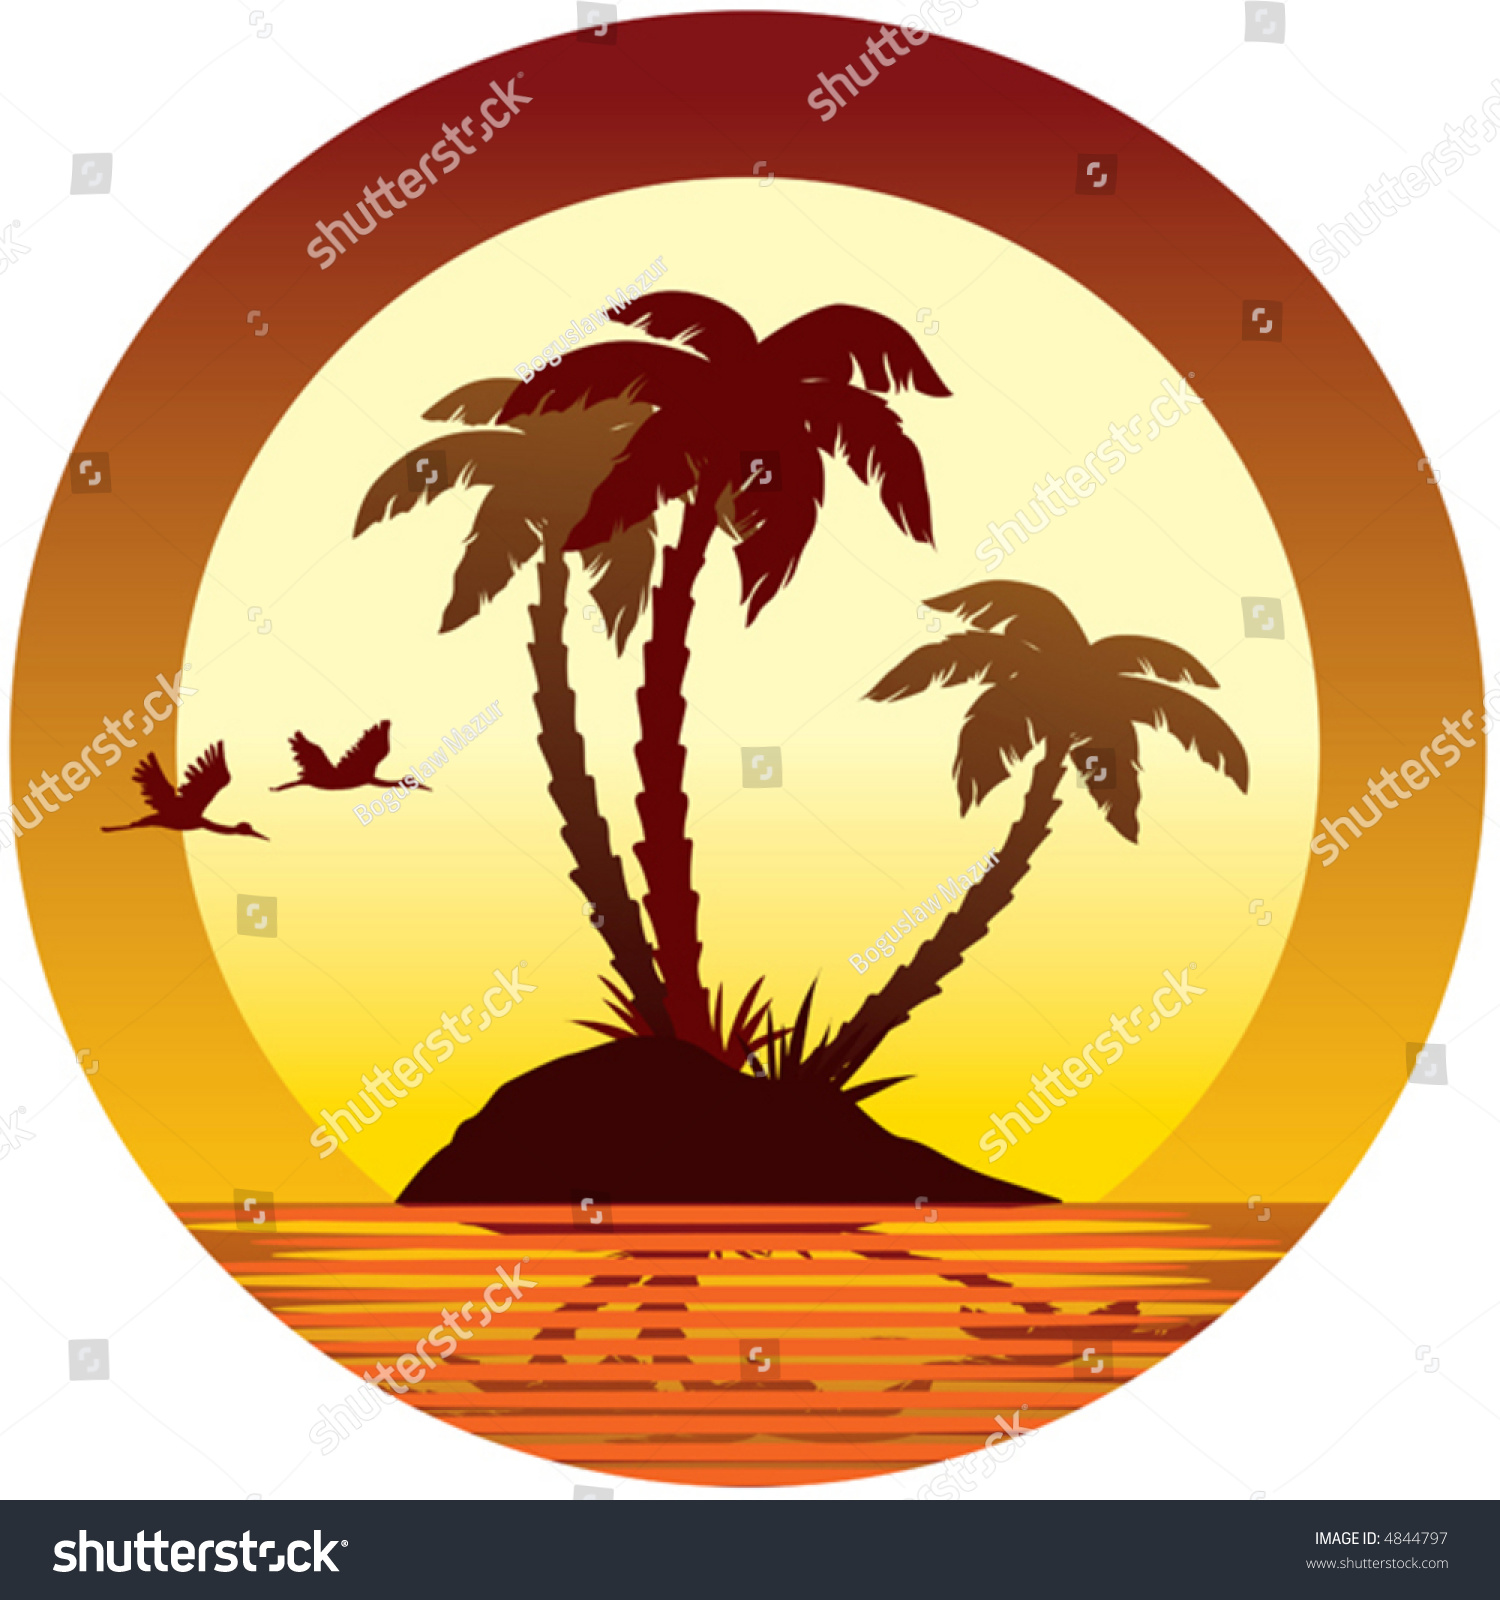 Sunset, Island, Palms And Birds, Vector - 4844797 : Shutterstock